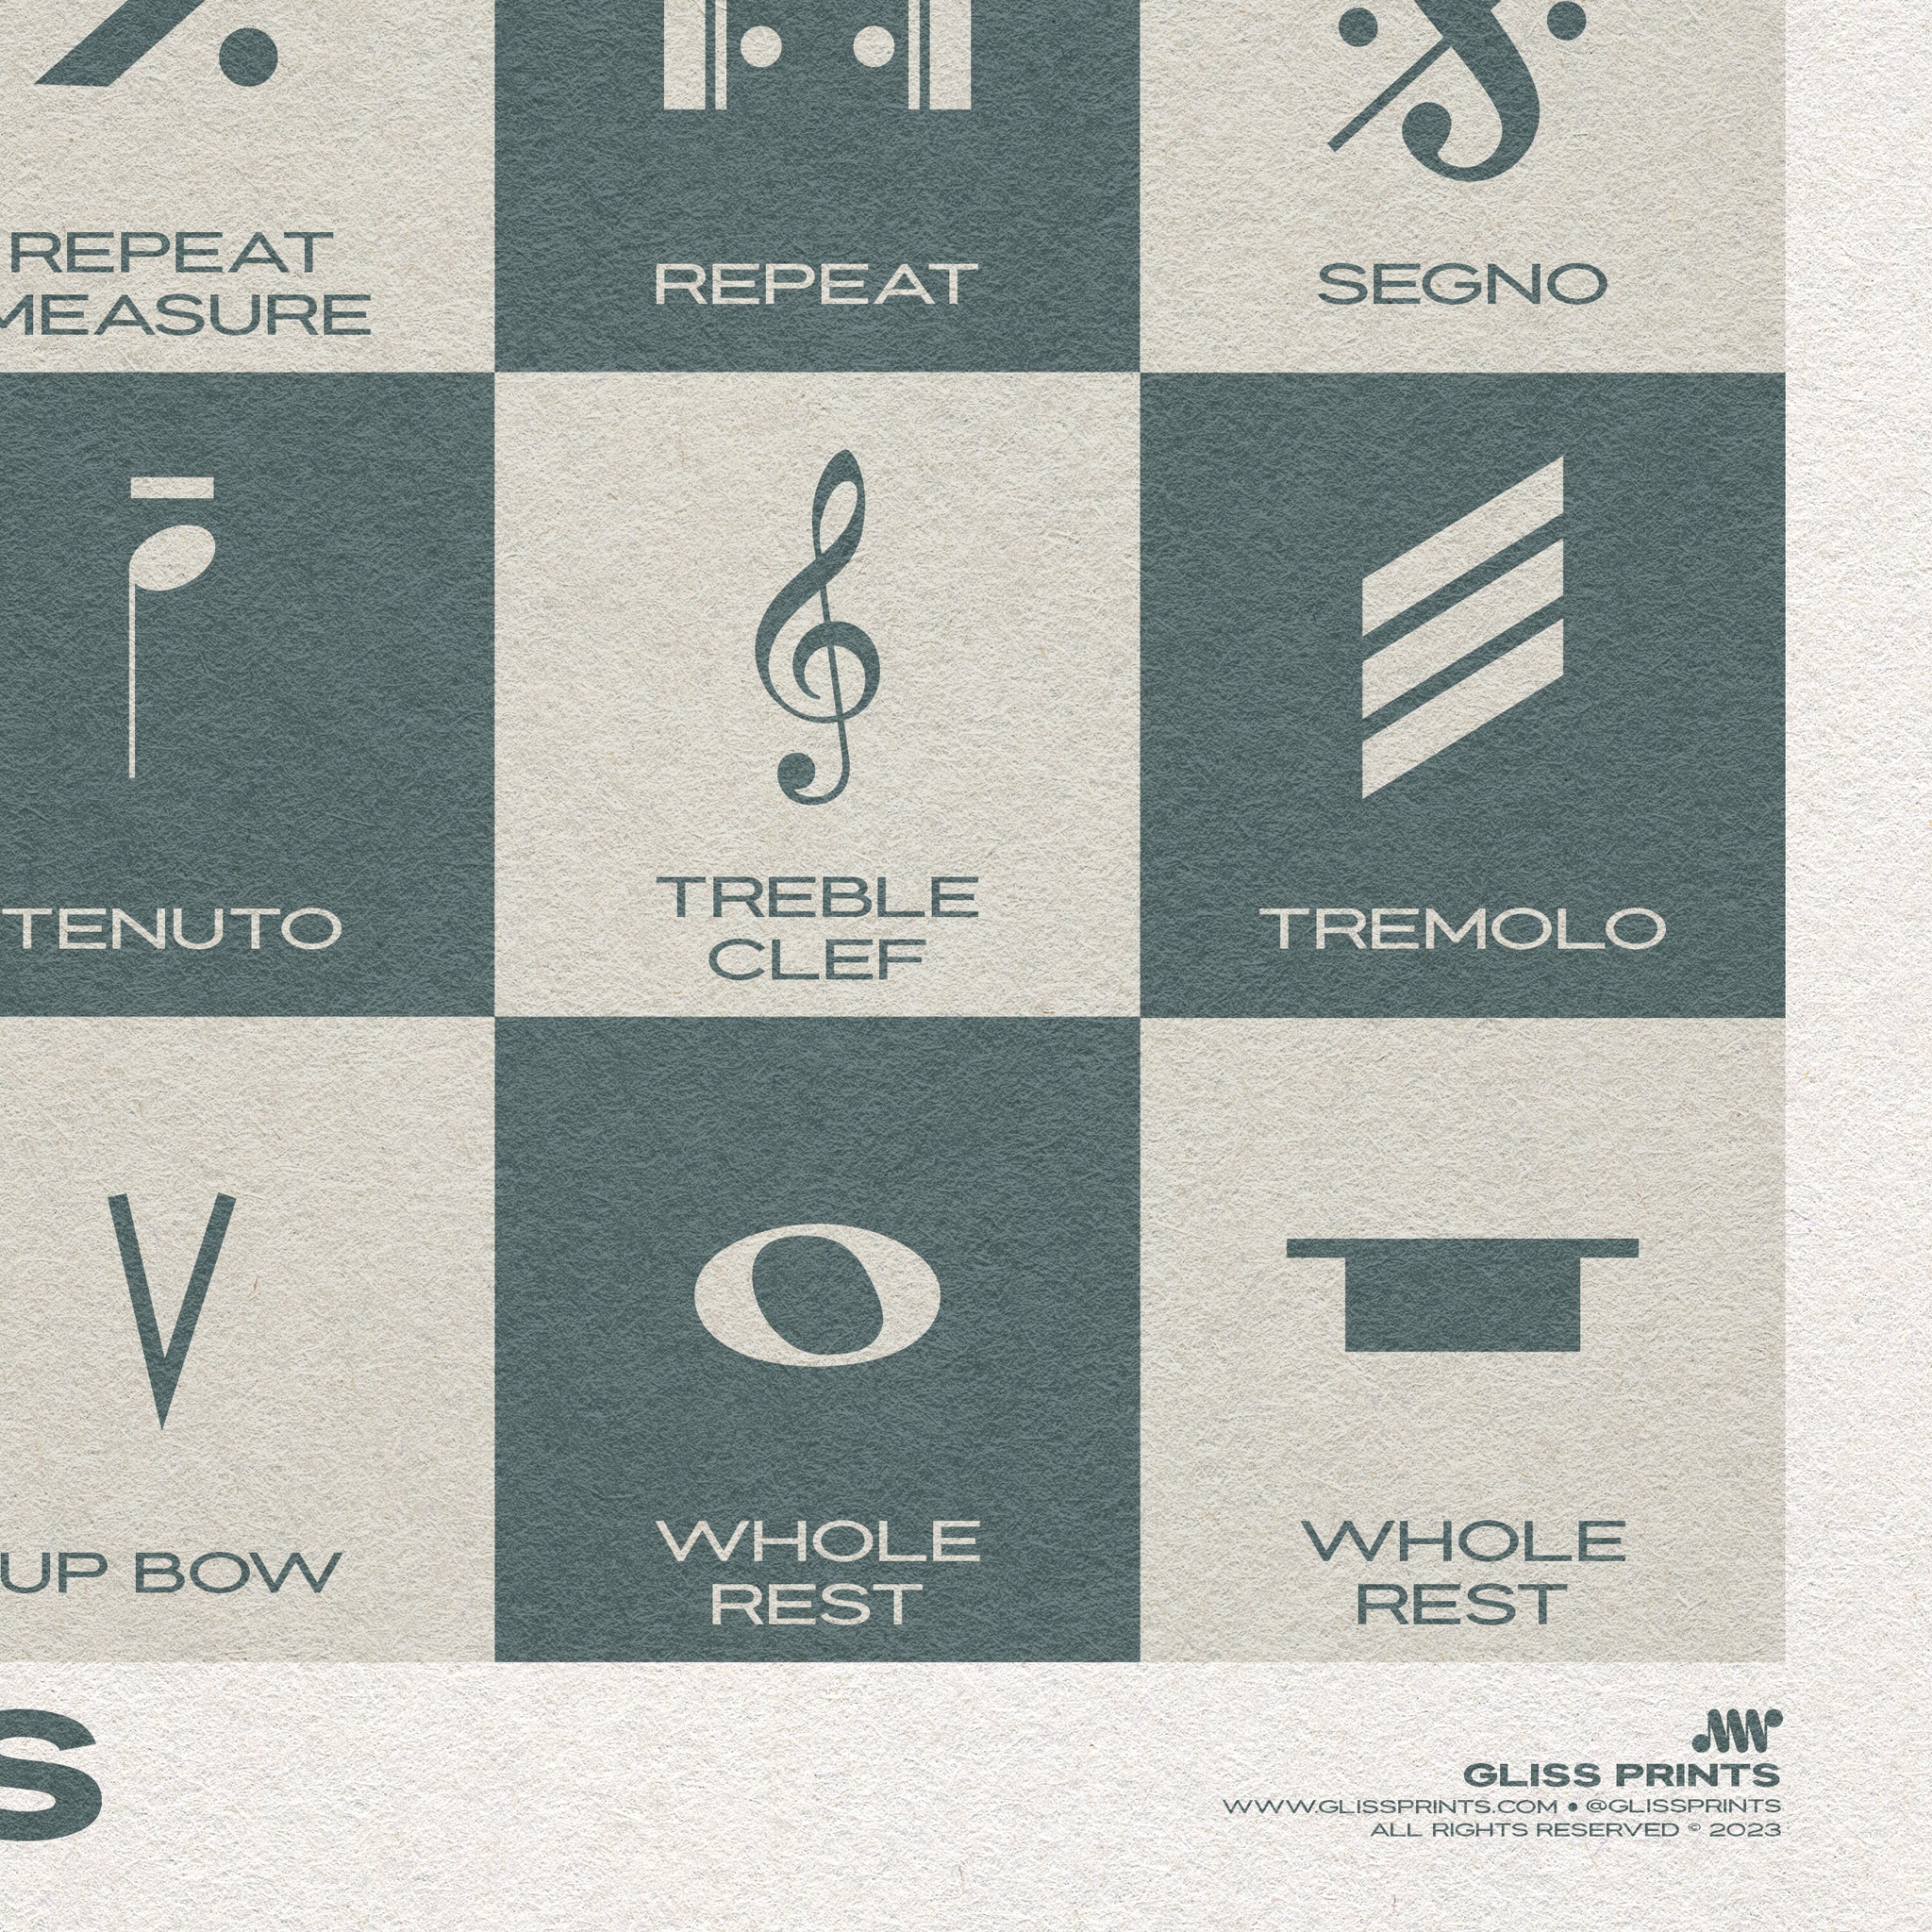 Music Symbols Checkered Design Poster, Blue